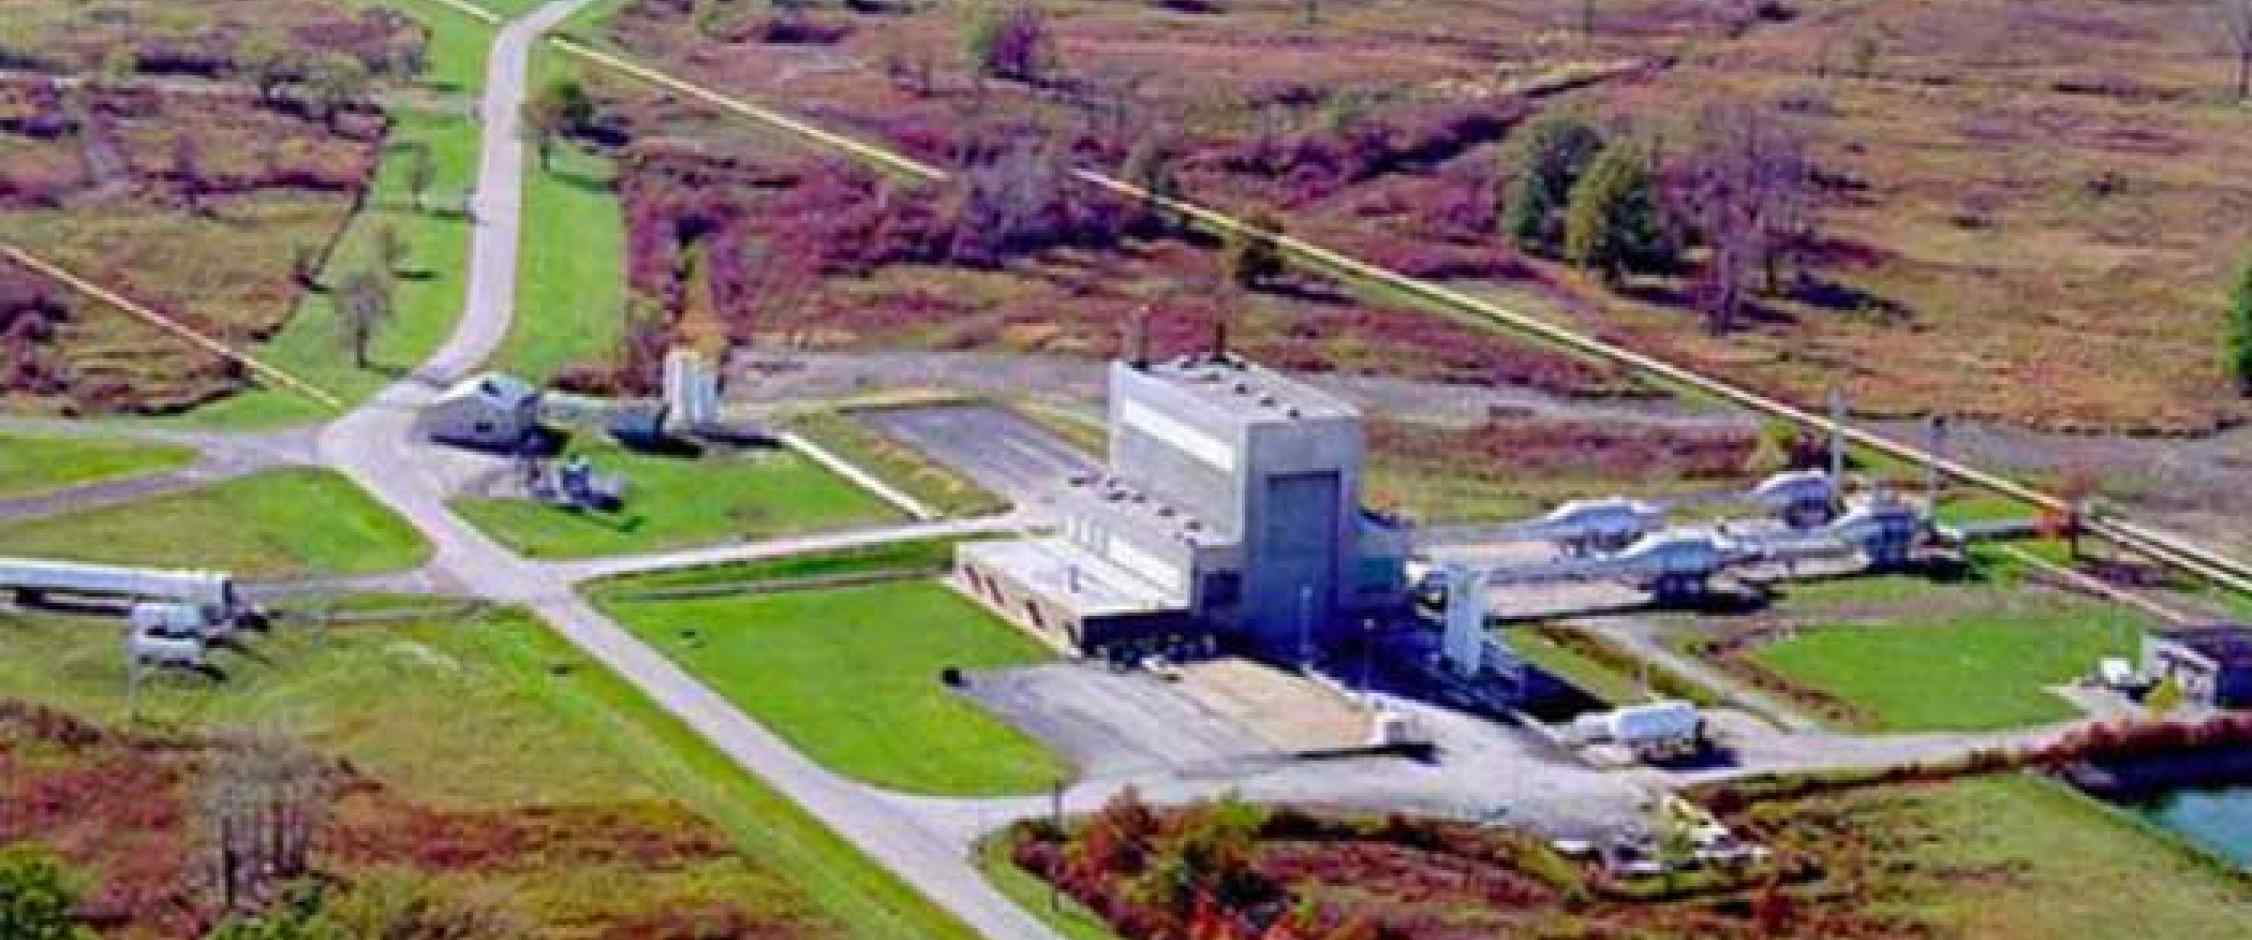 NASA - Plum Brook Plant